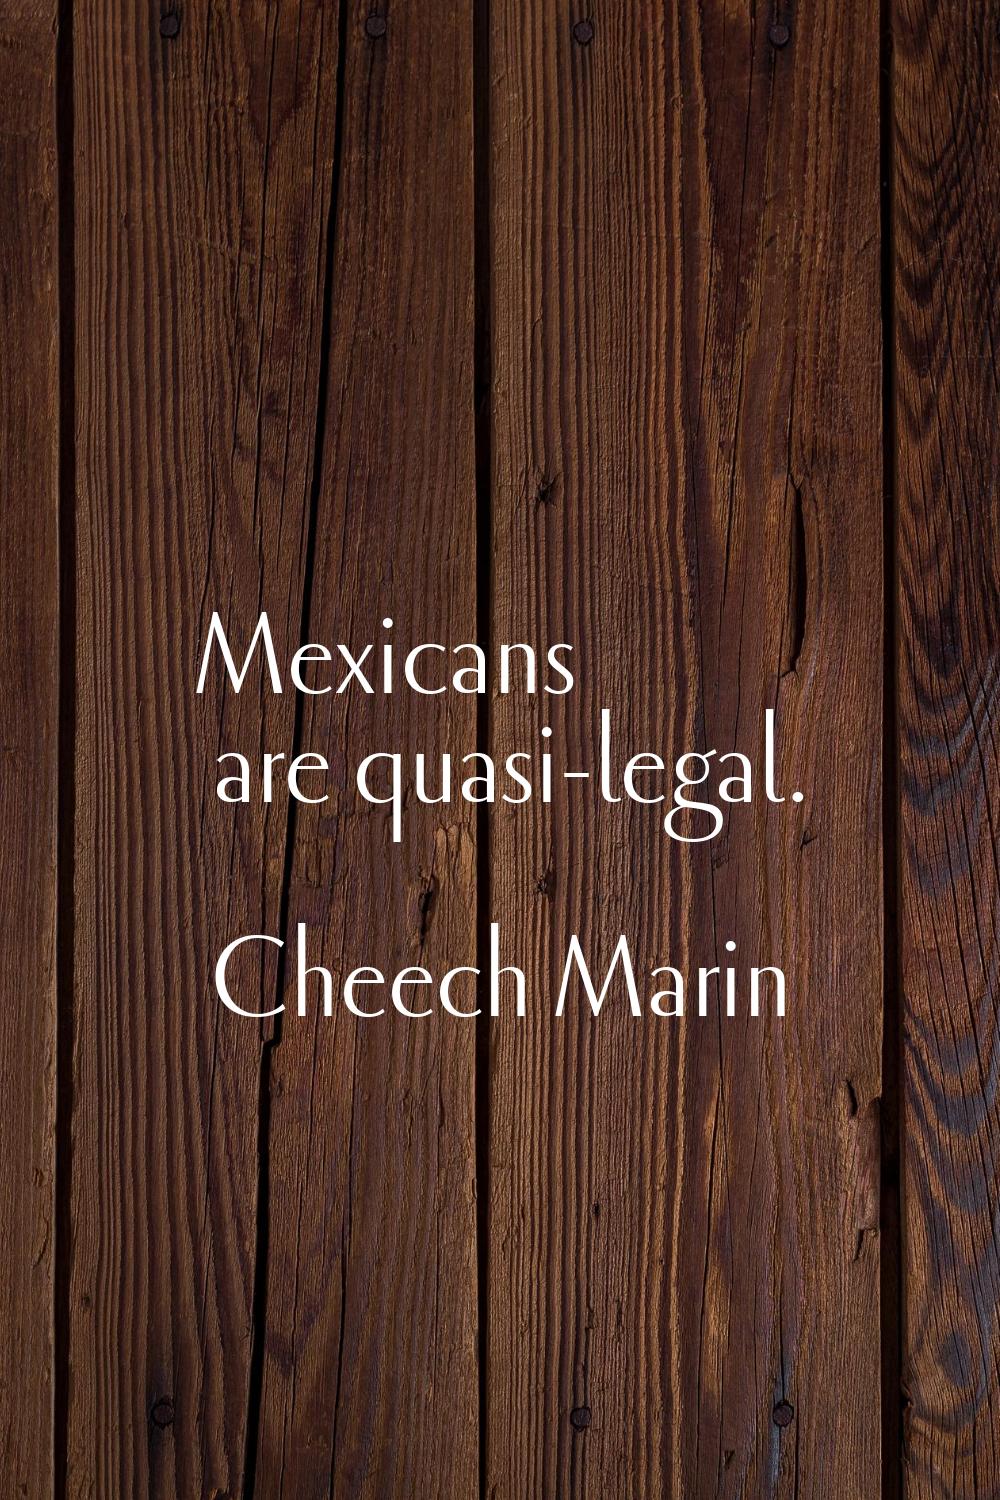 Mexicans are quasi-legal.